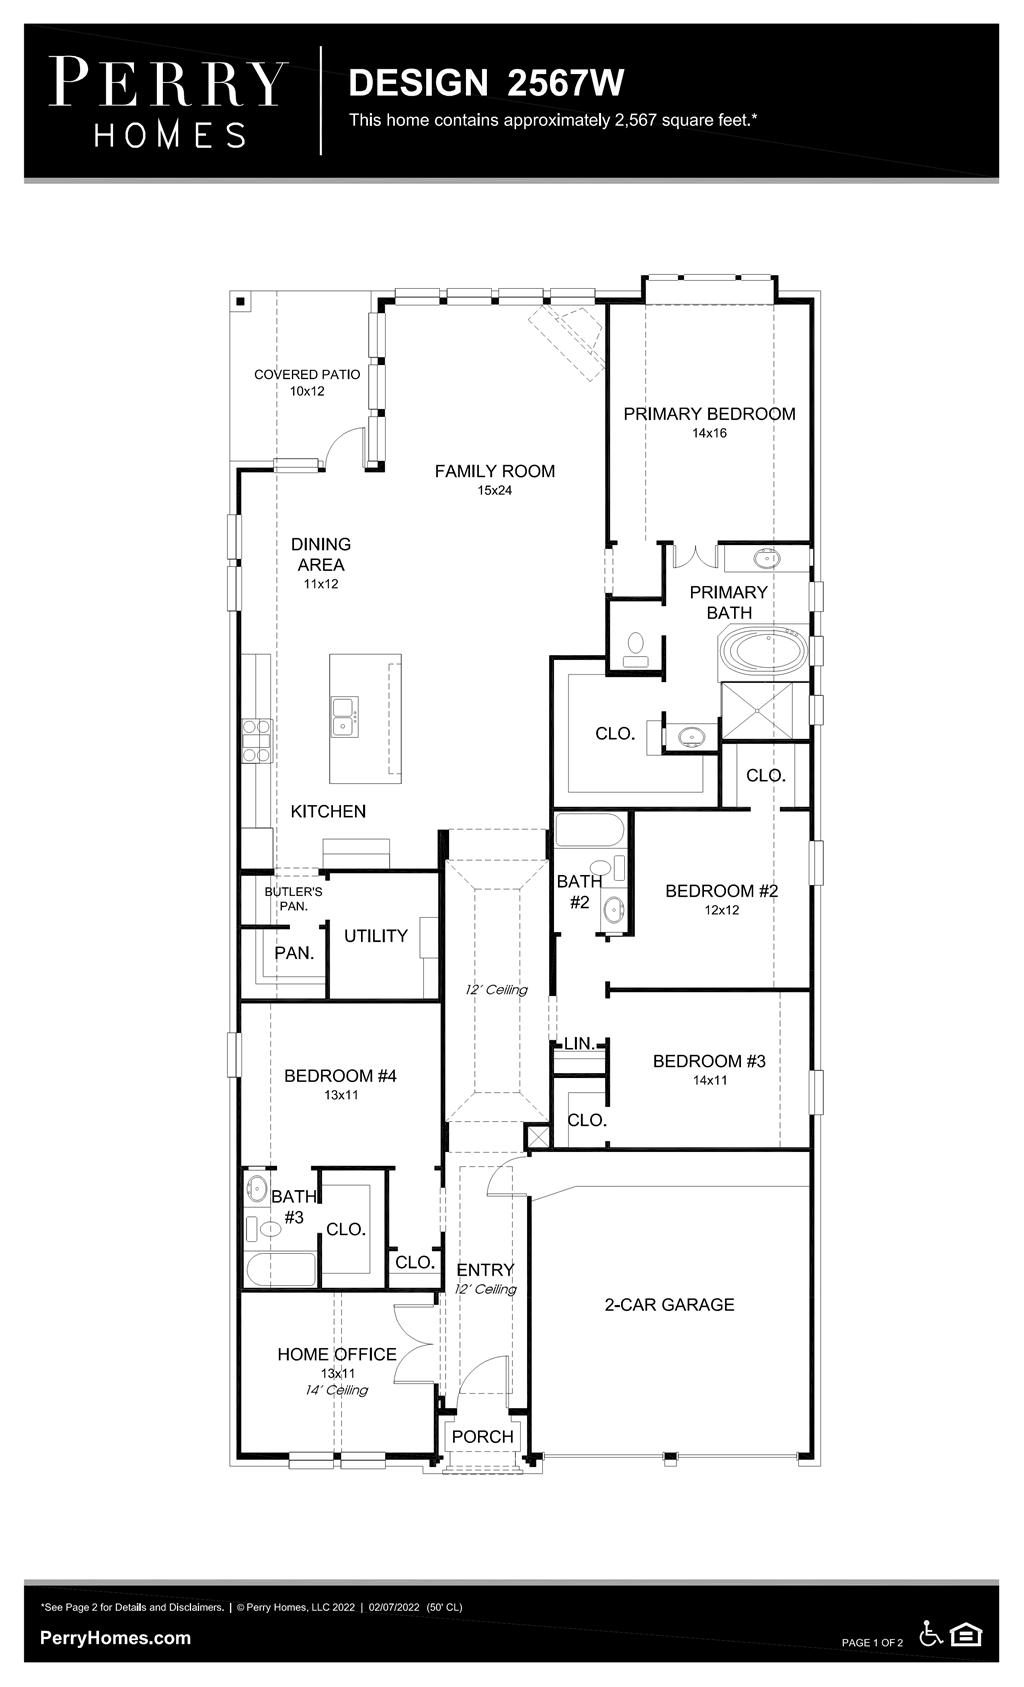 Floor Plan for 2567W